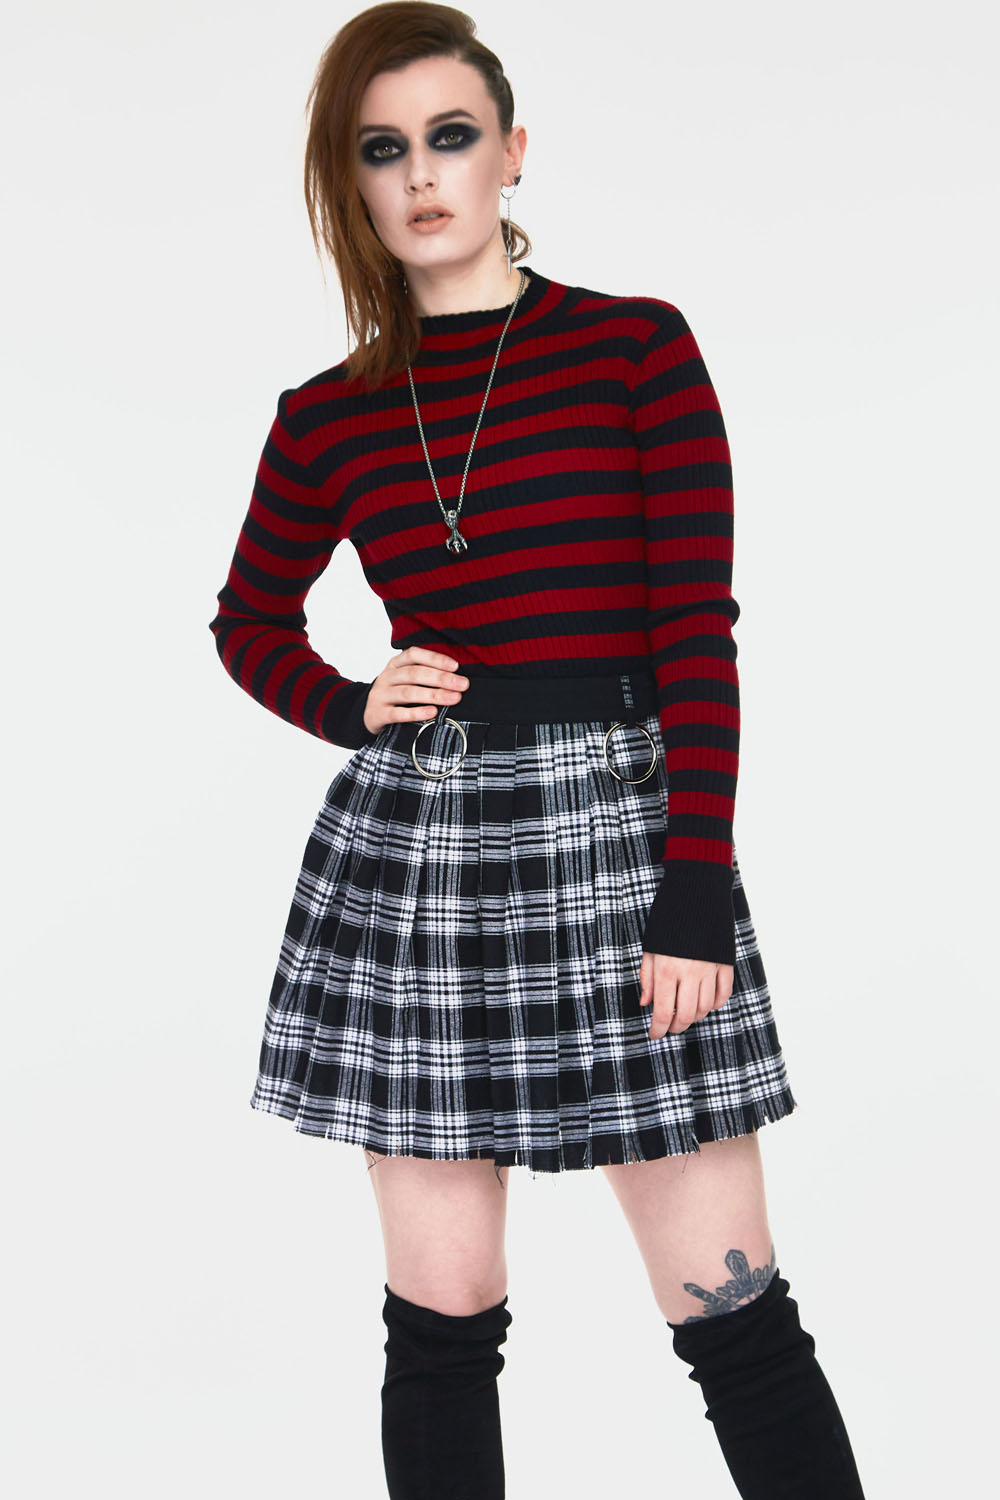 Teen Spirit Black Tartan Pleated Skirt